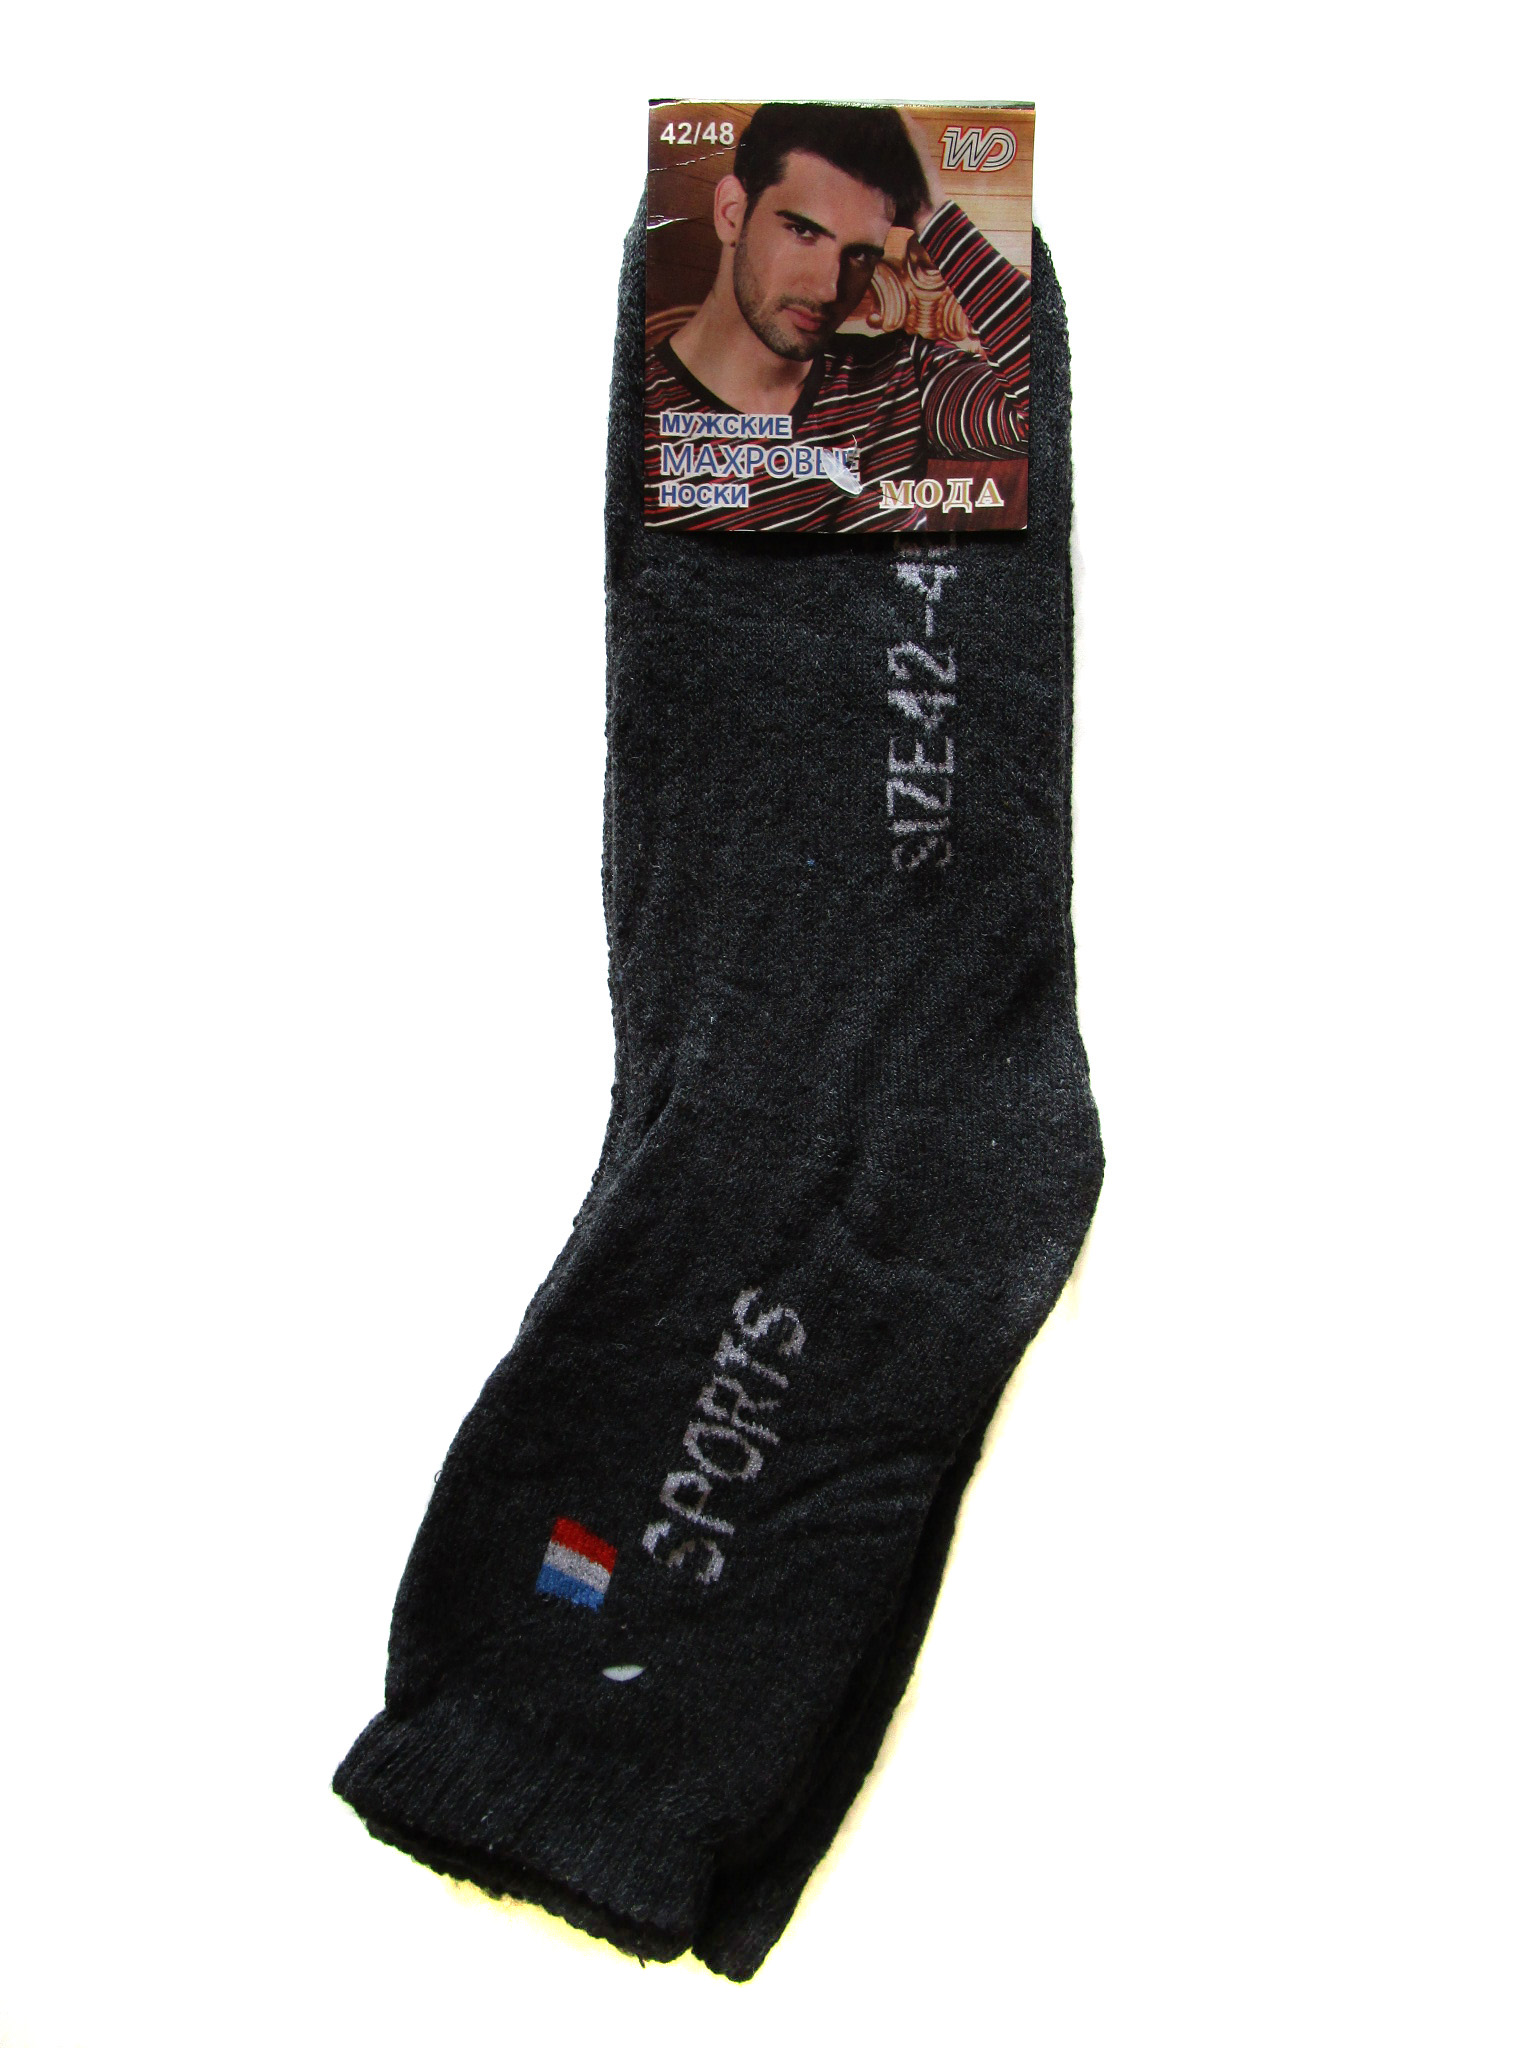 Мужские носки теплые "Мода" (арт.608)